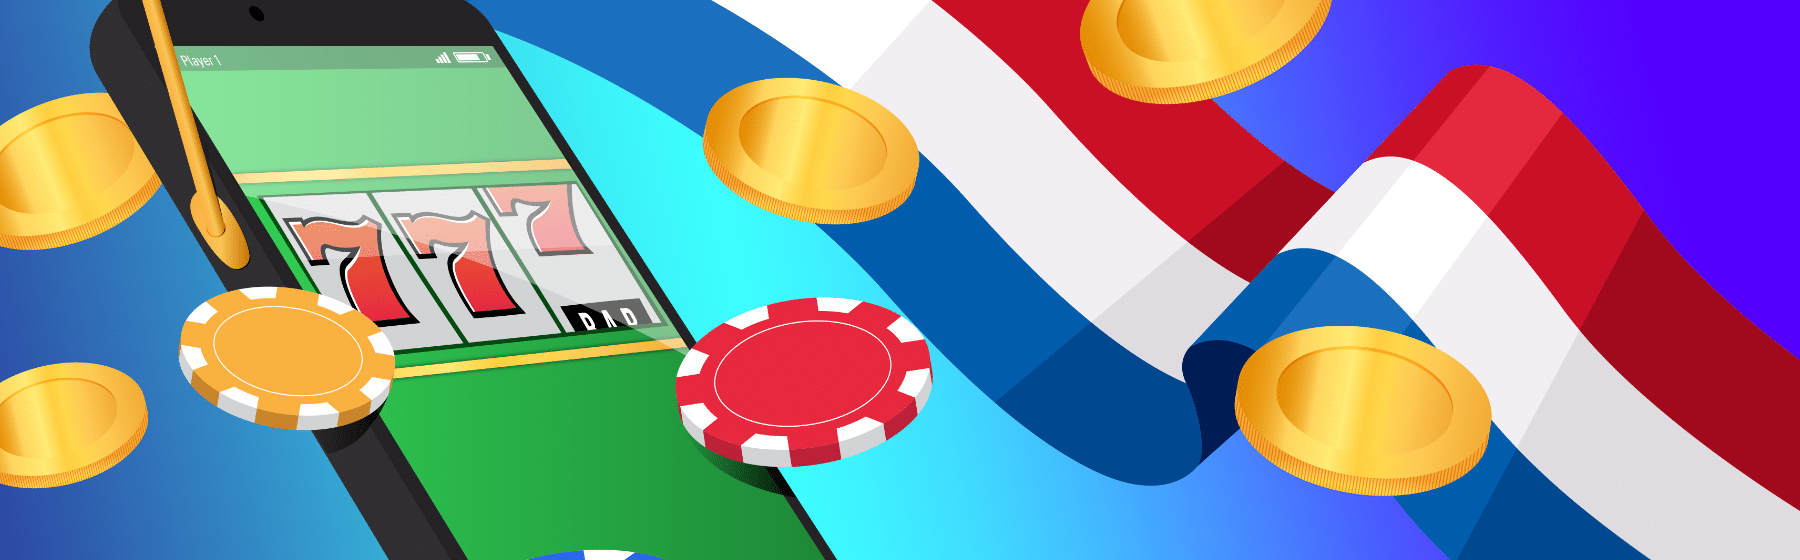 jackpot op mobiele telefoon, casinofiches en Nederlandse vlag